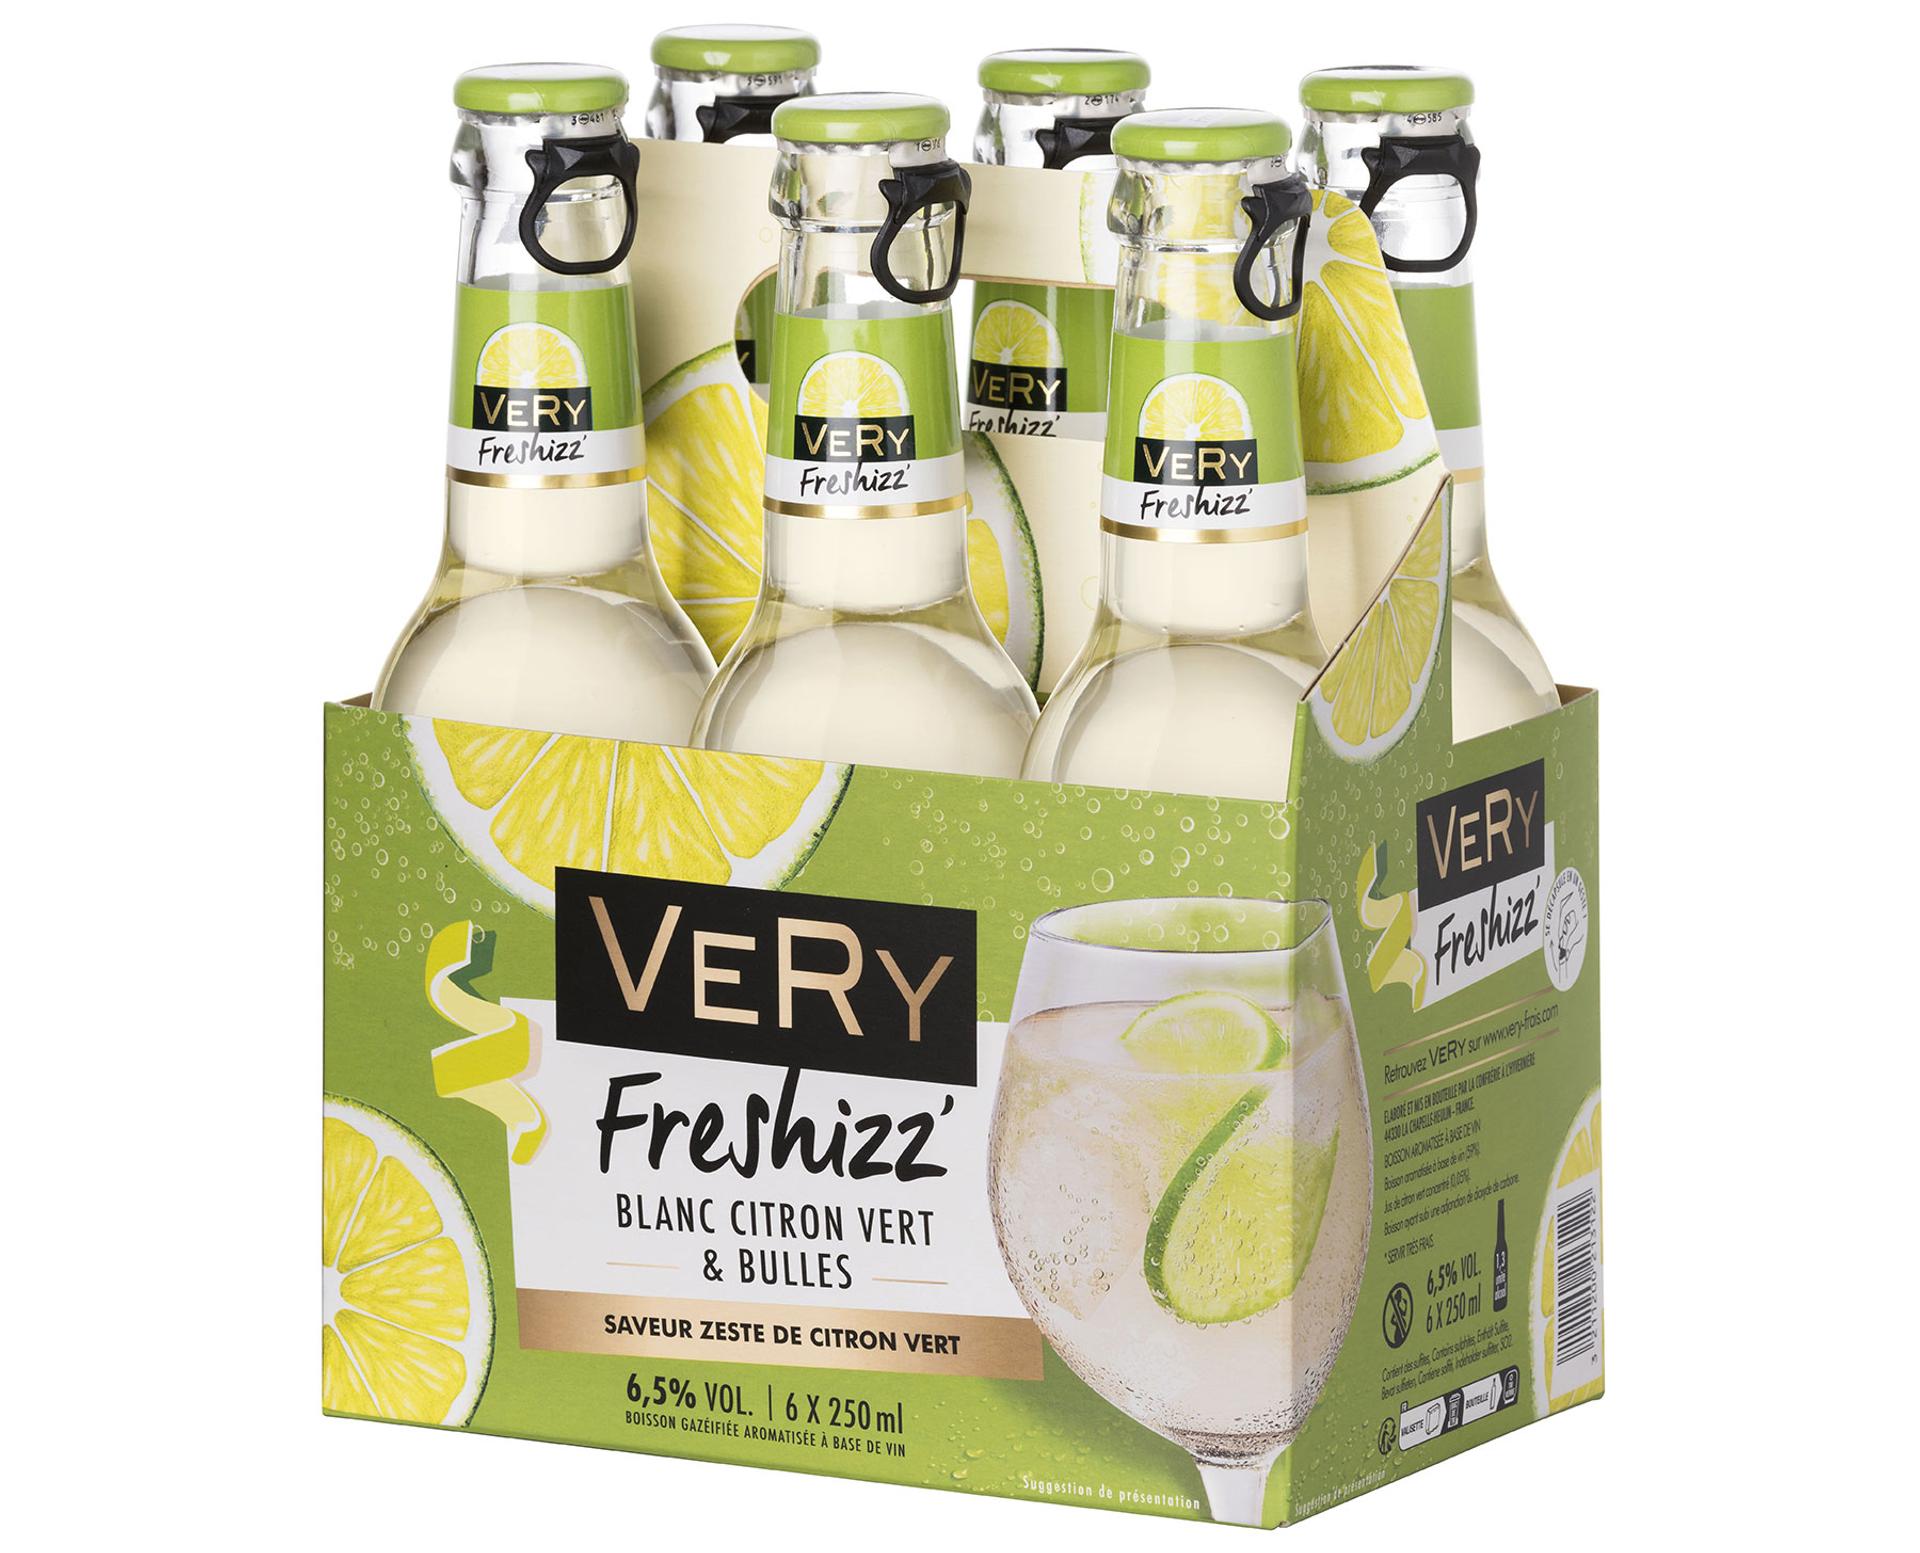 VeRy Freshizz’ citron vert